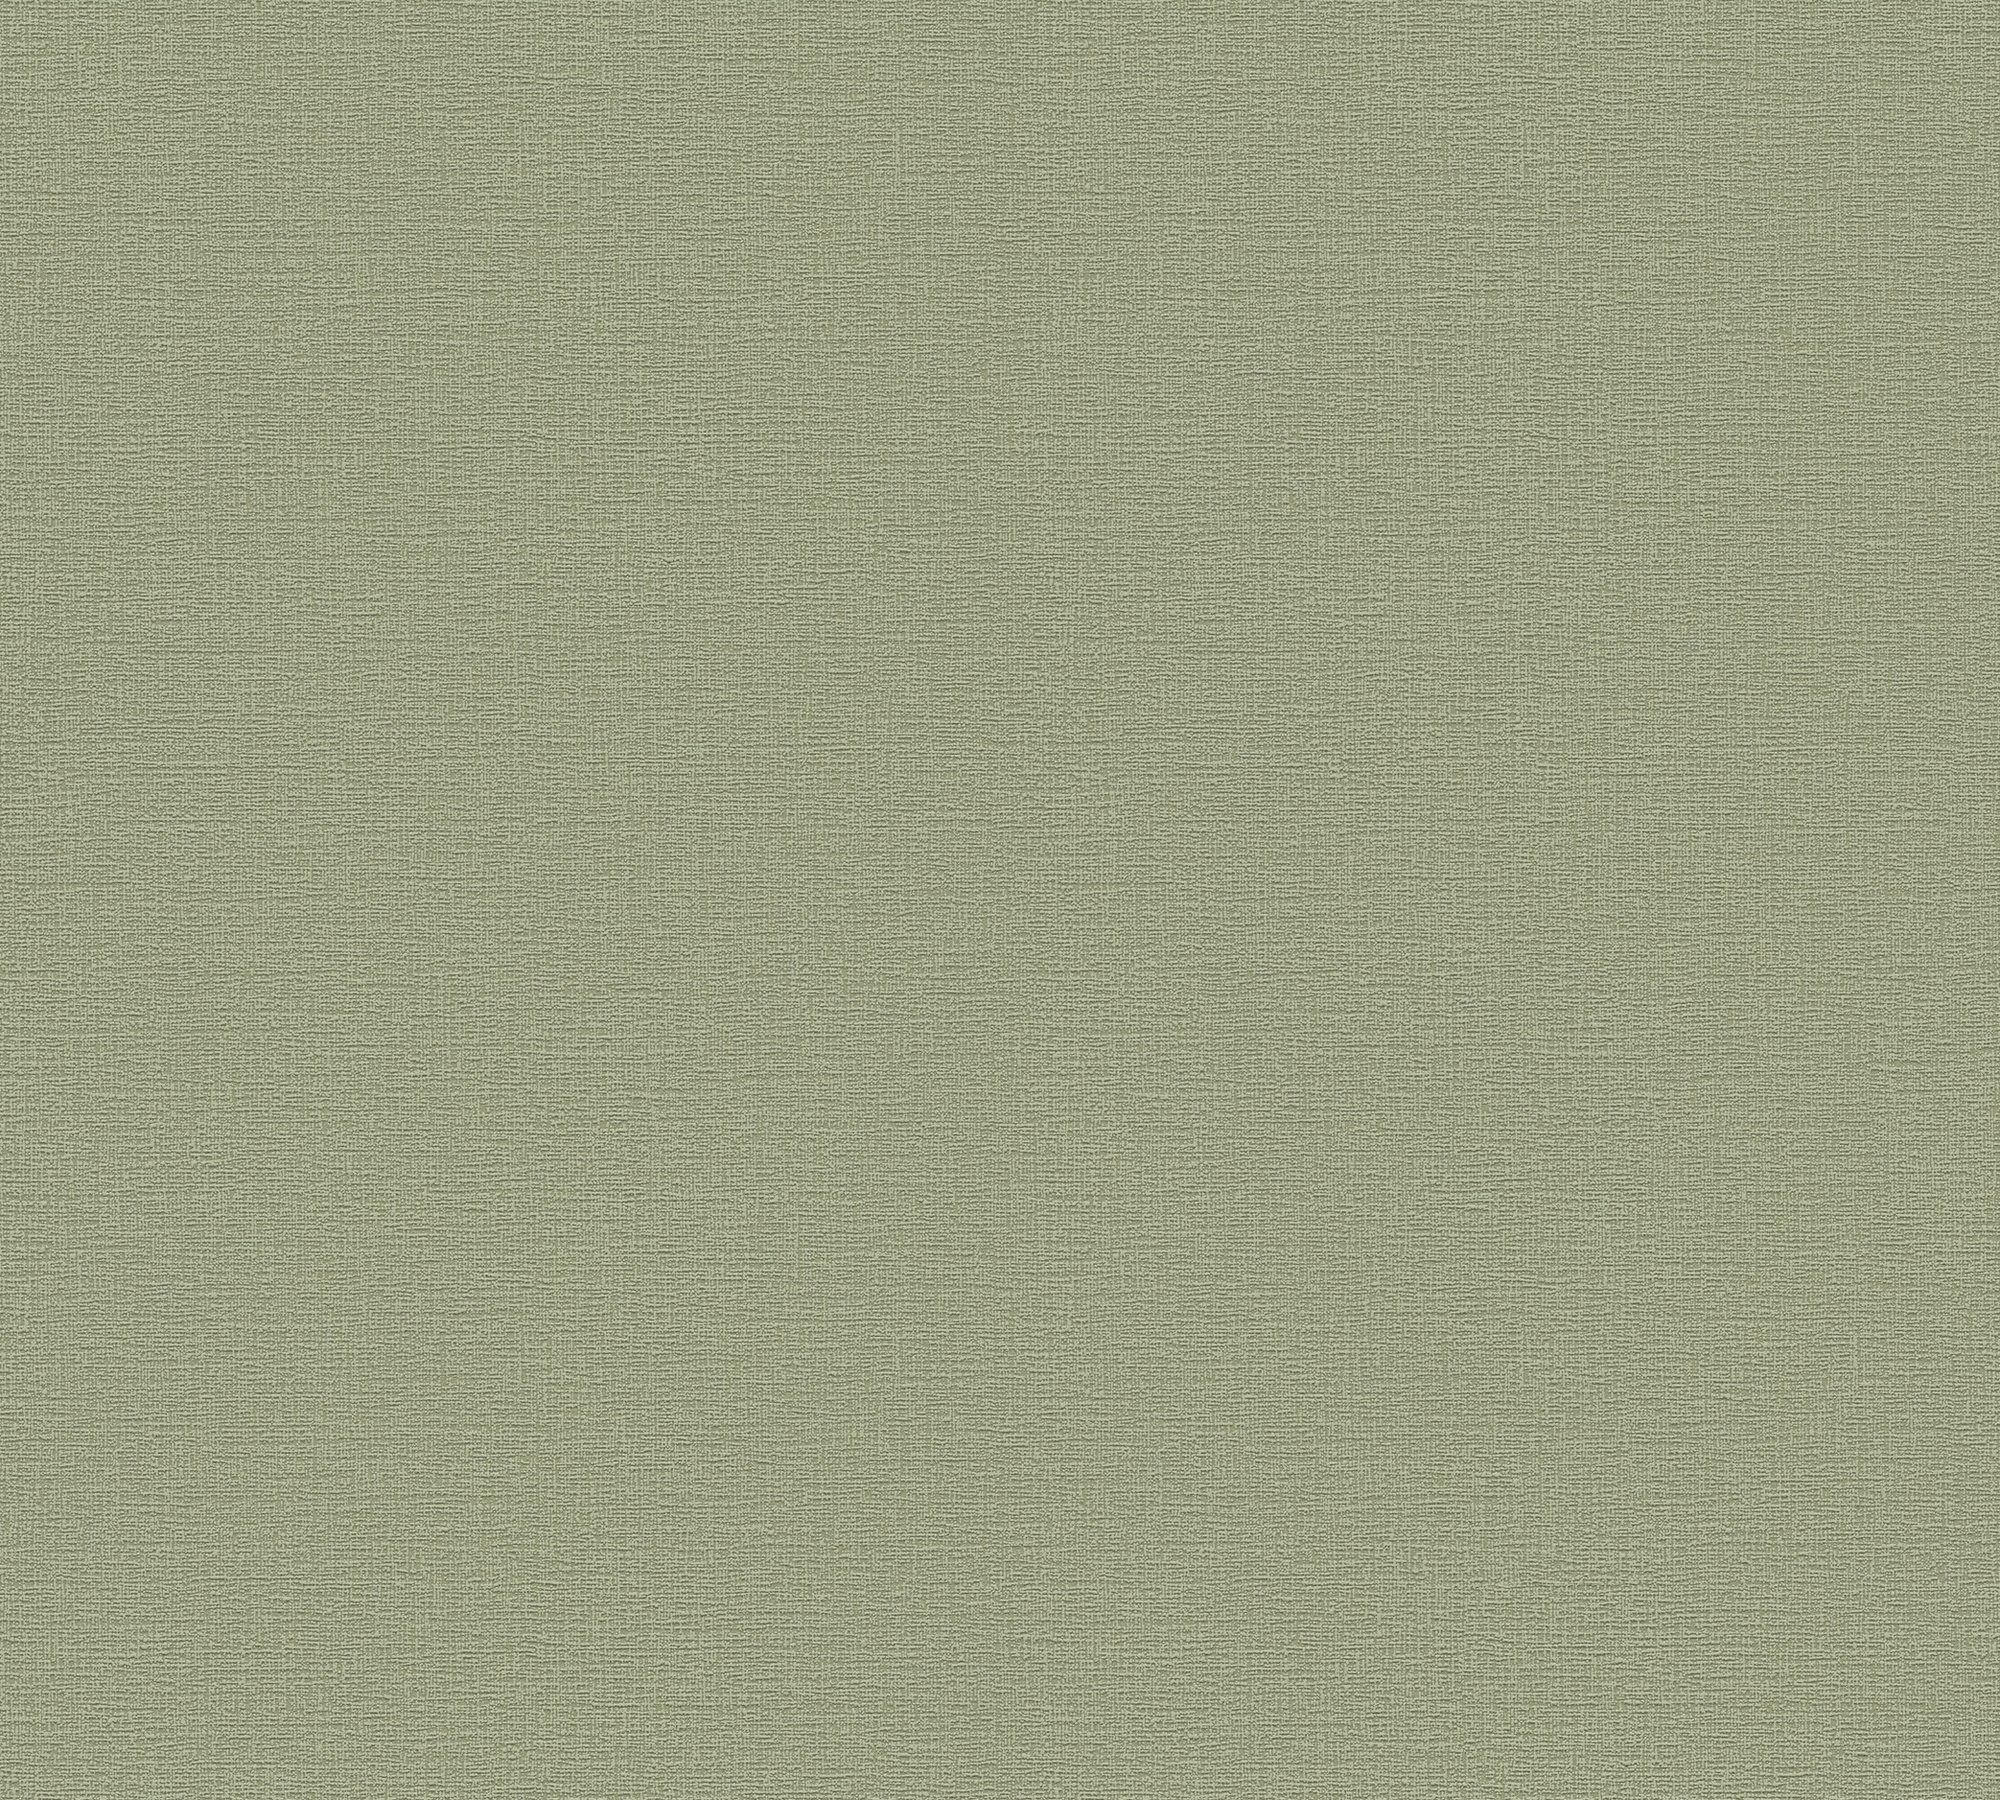 Vliestapete grün/dunkelgrün Tapete uni, A.S. Greenery Uni, Création Einfarbig strukturiert, Uni